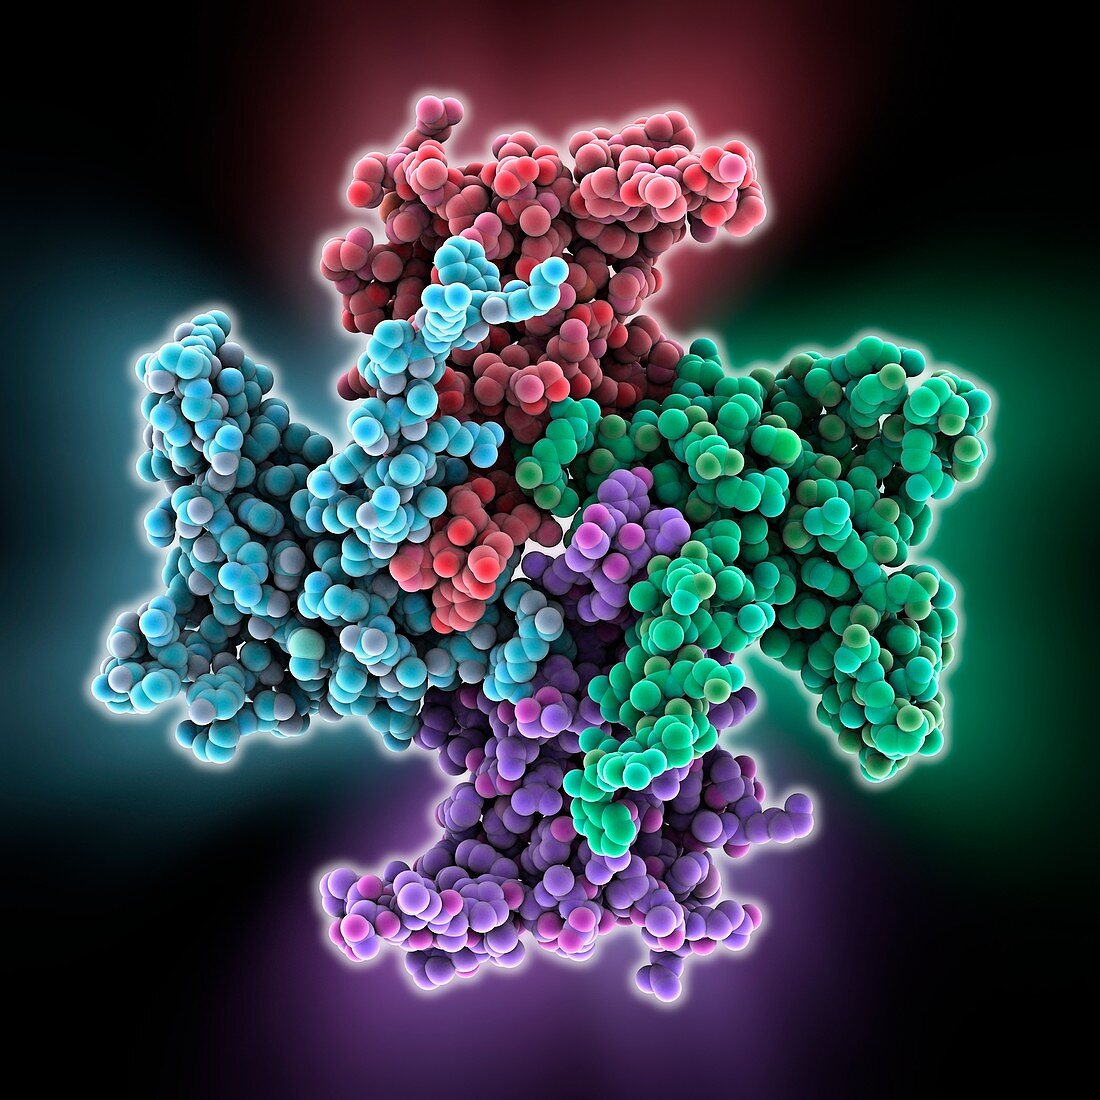 Mitochondrial RNA-binding proteins